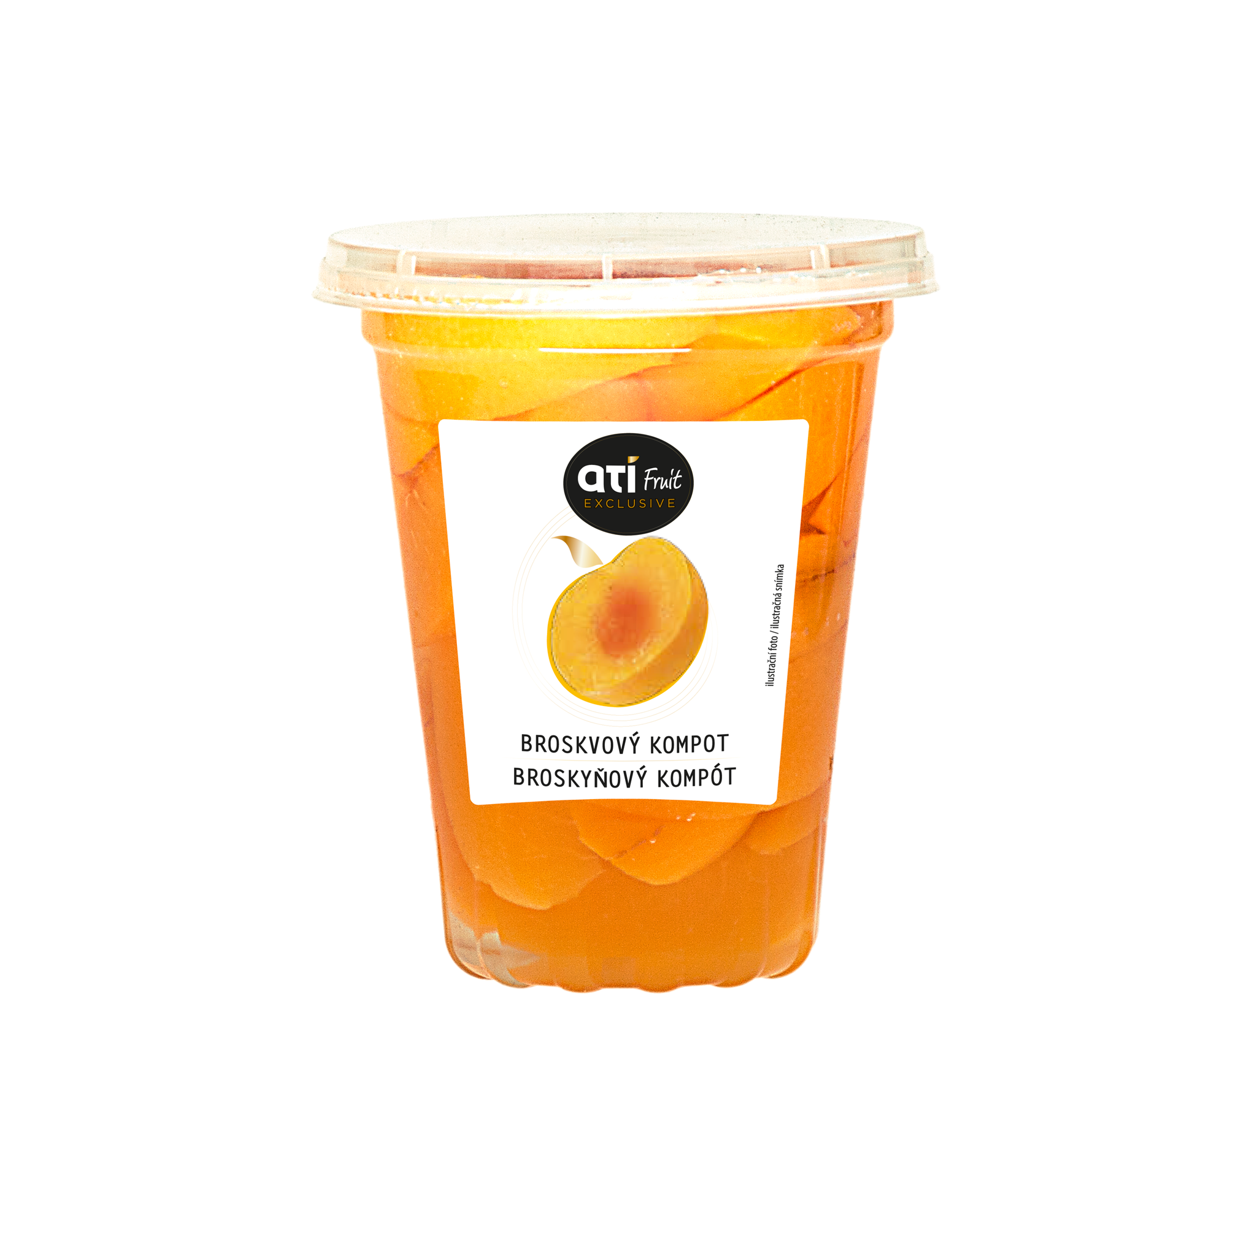 ATI Fruit Exclusive peach family pack